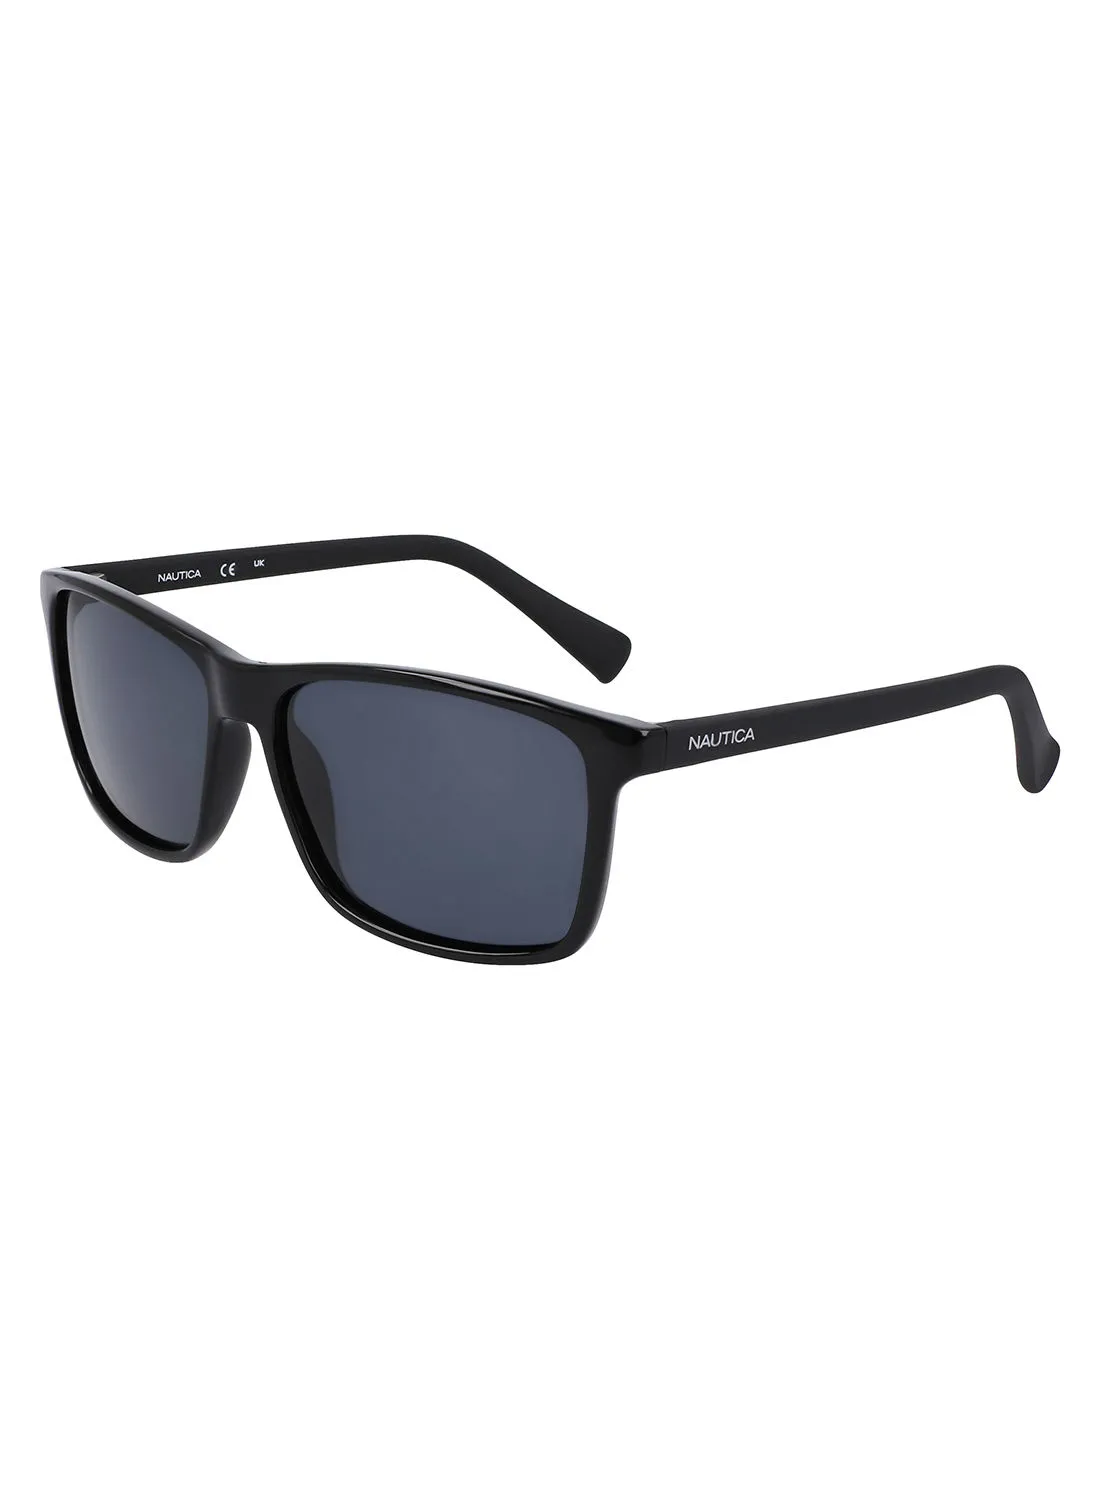 NAUTICA Men's Rectangular Sunglasses - N2246S-001-5815 - Lens Size: 58 Mm